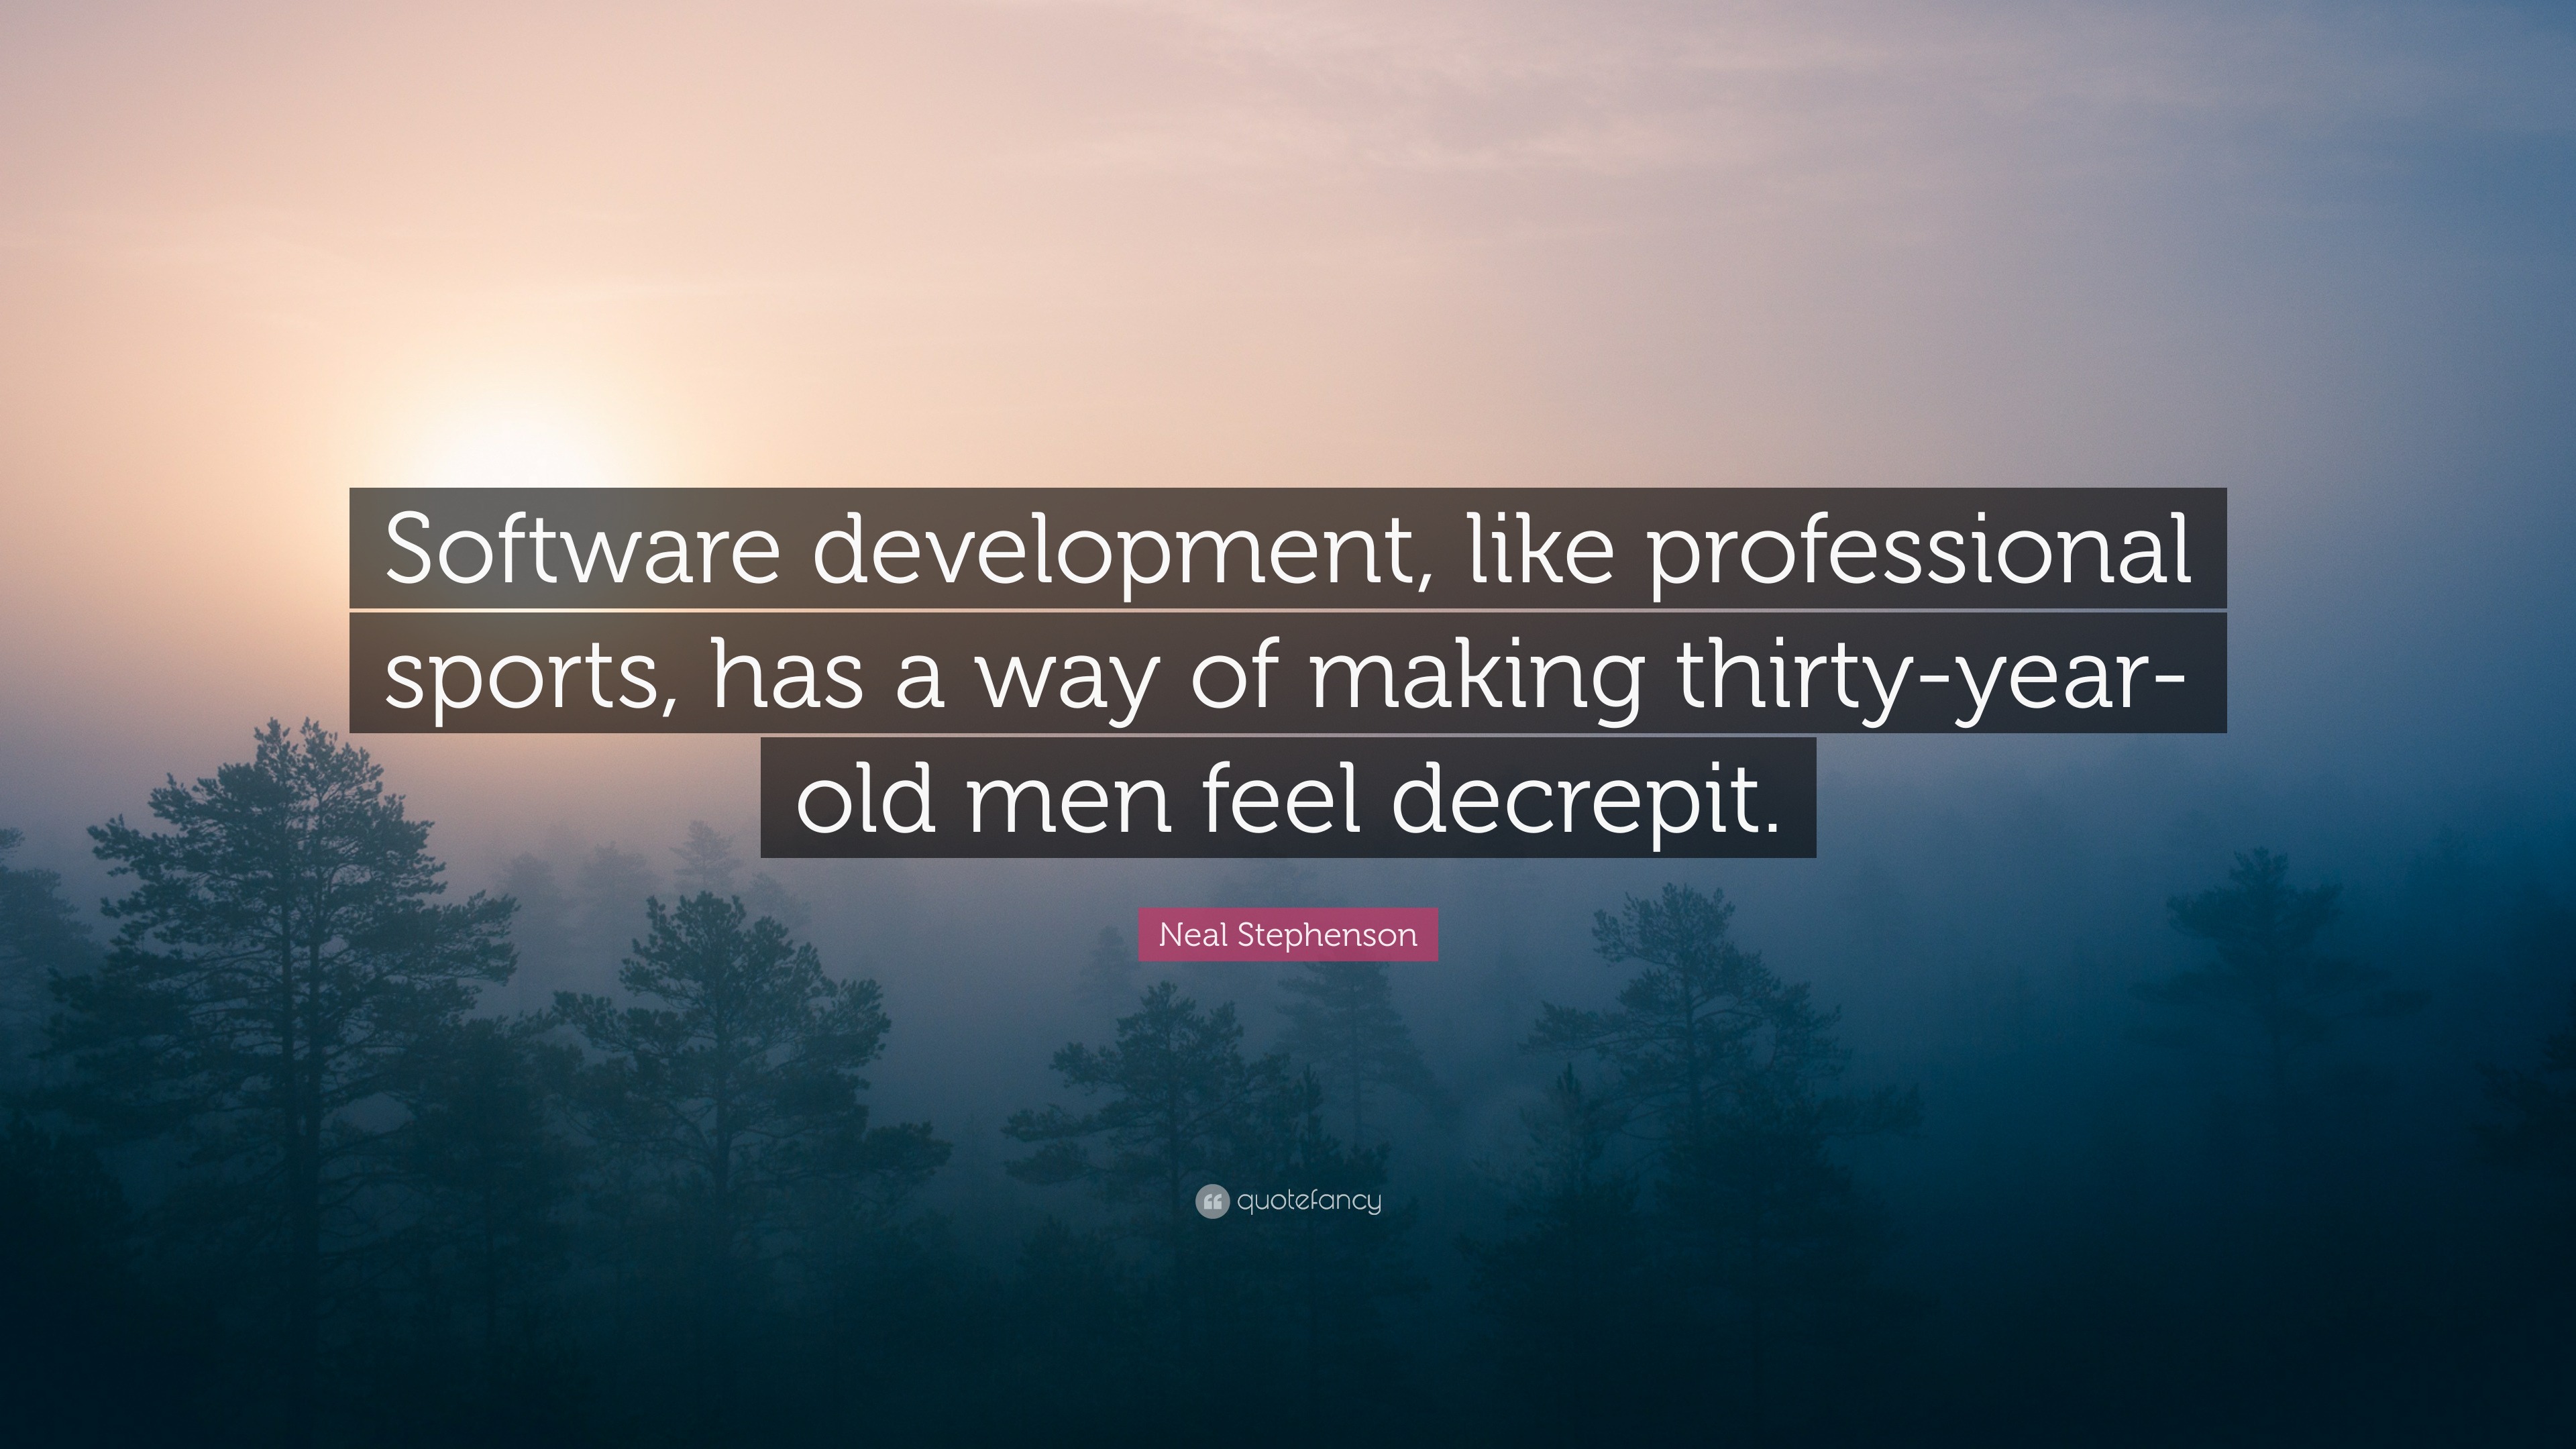 Neal Stephenson Quote: “Software development, like professional sports